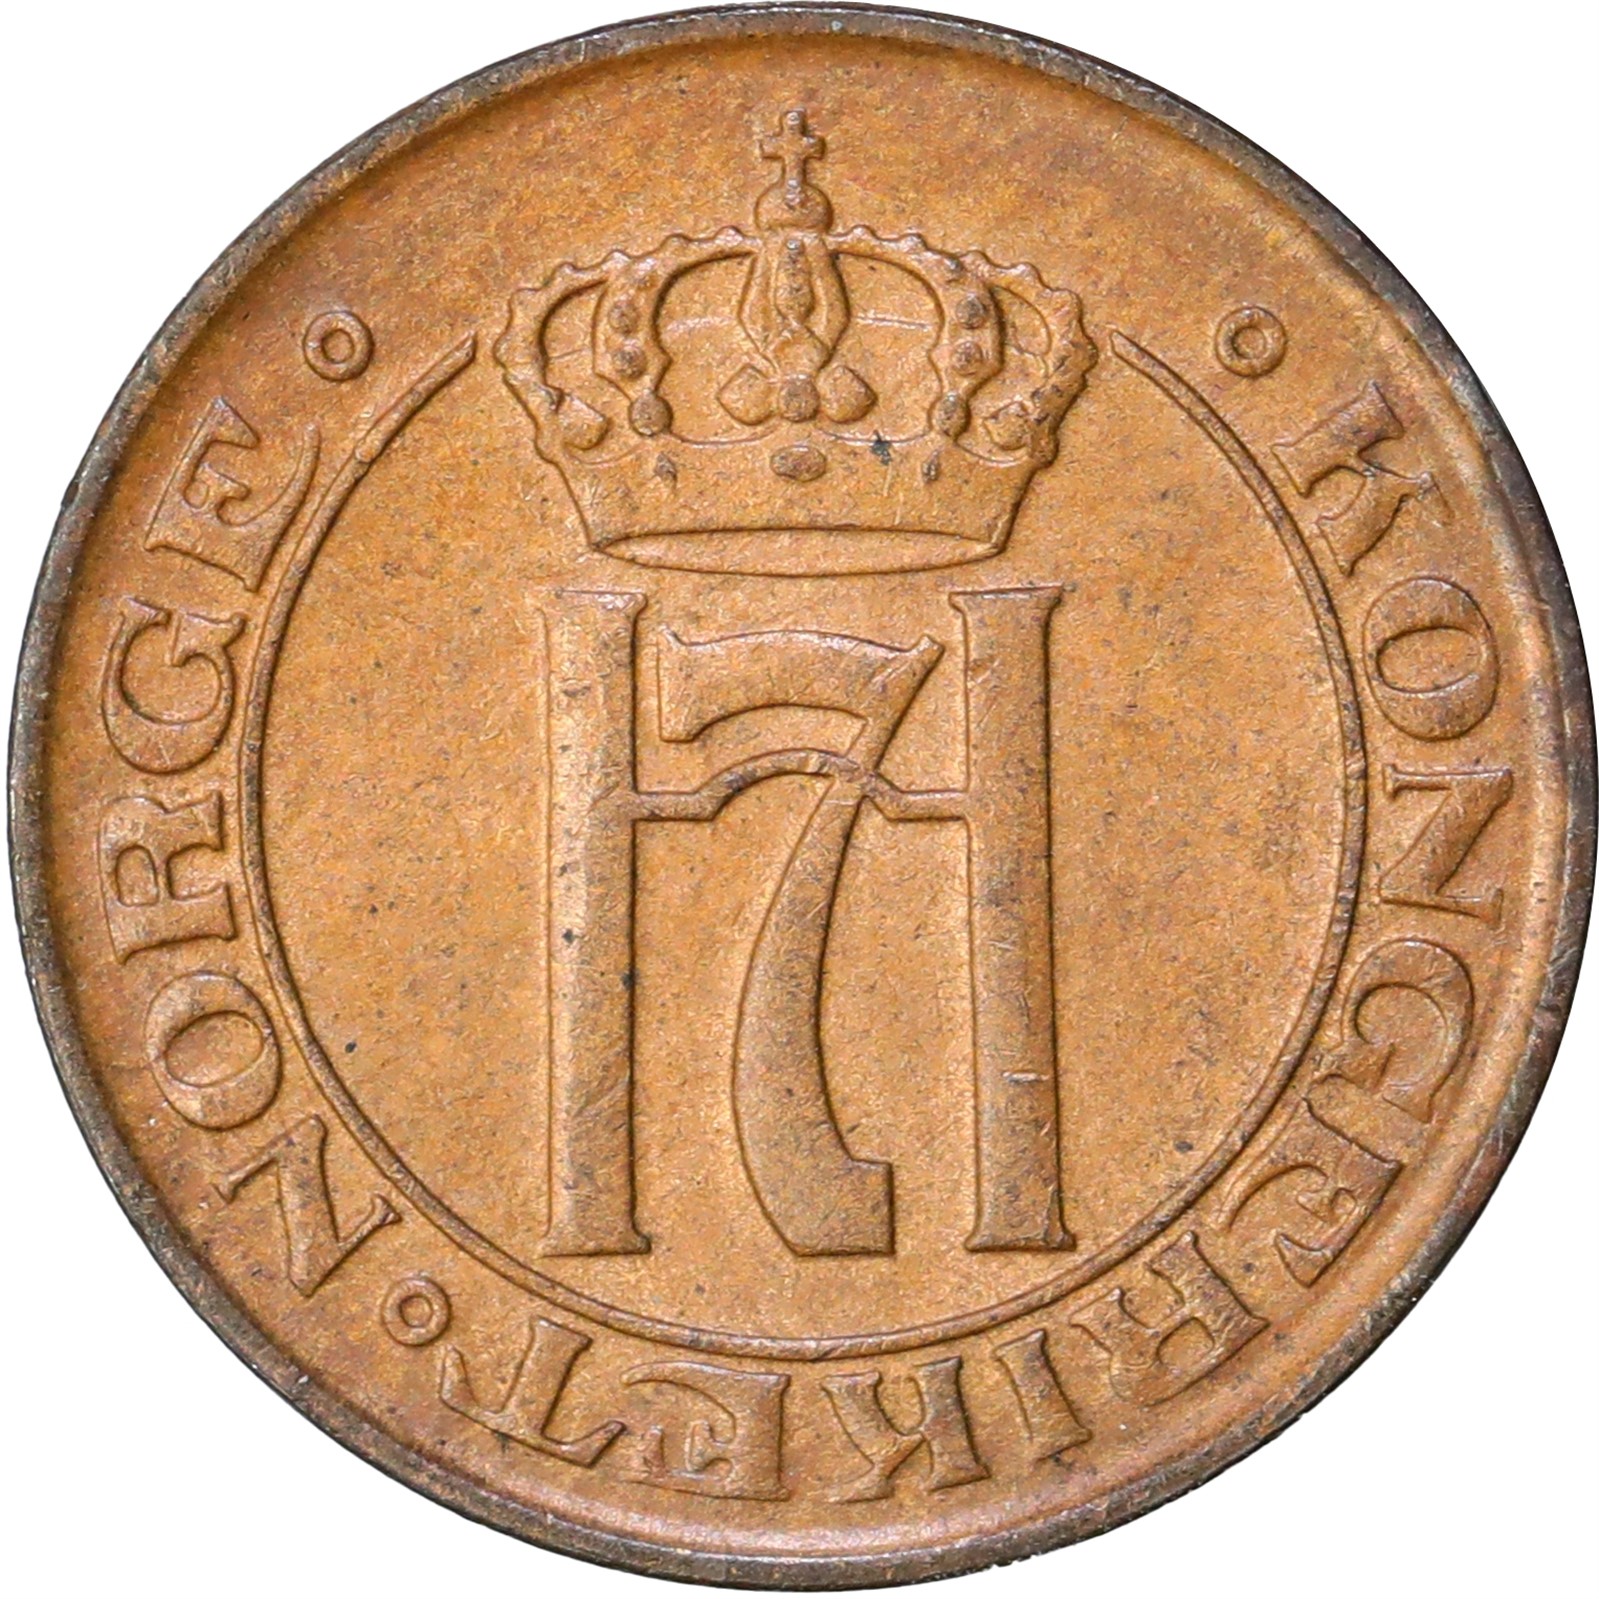 NORWAY. Haakon VII. 1 Øre 1908 Kv 0 (UNC)